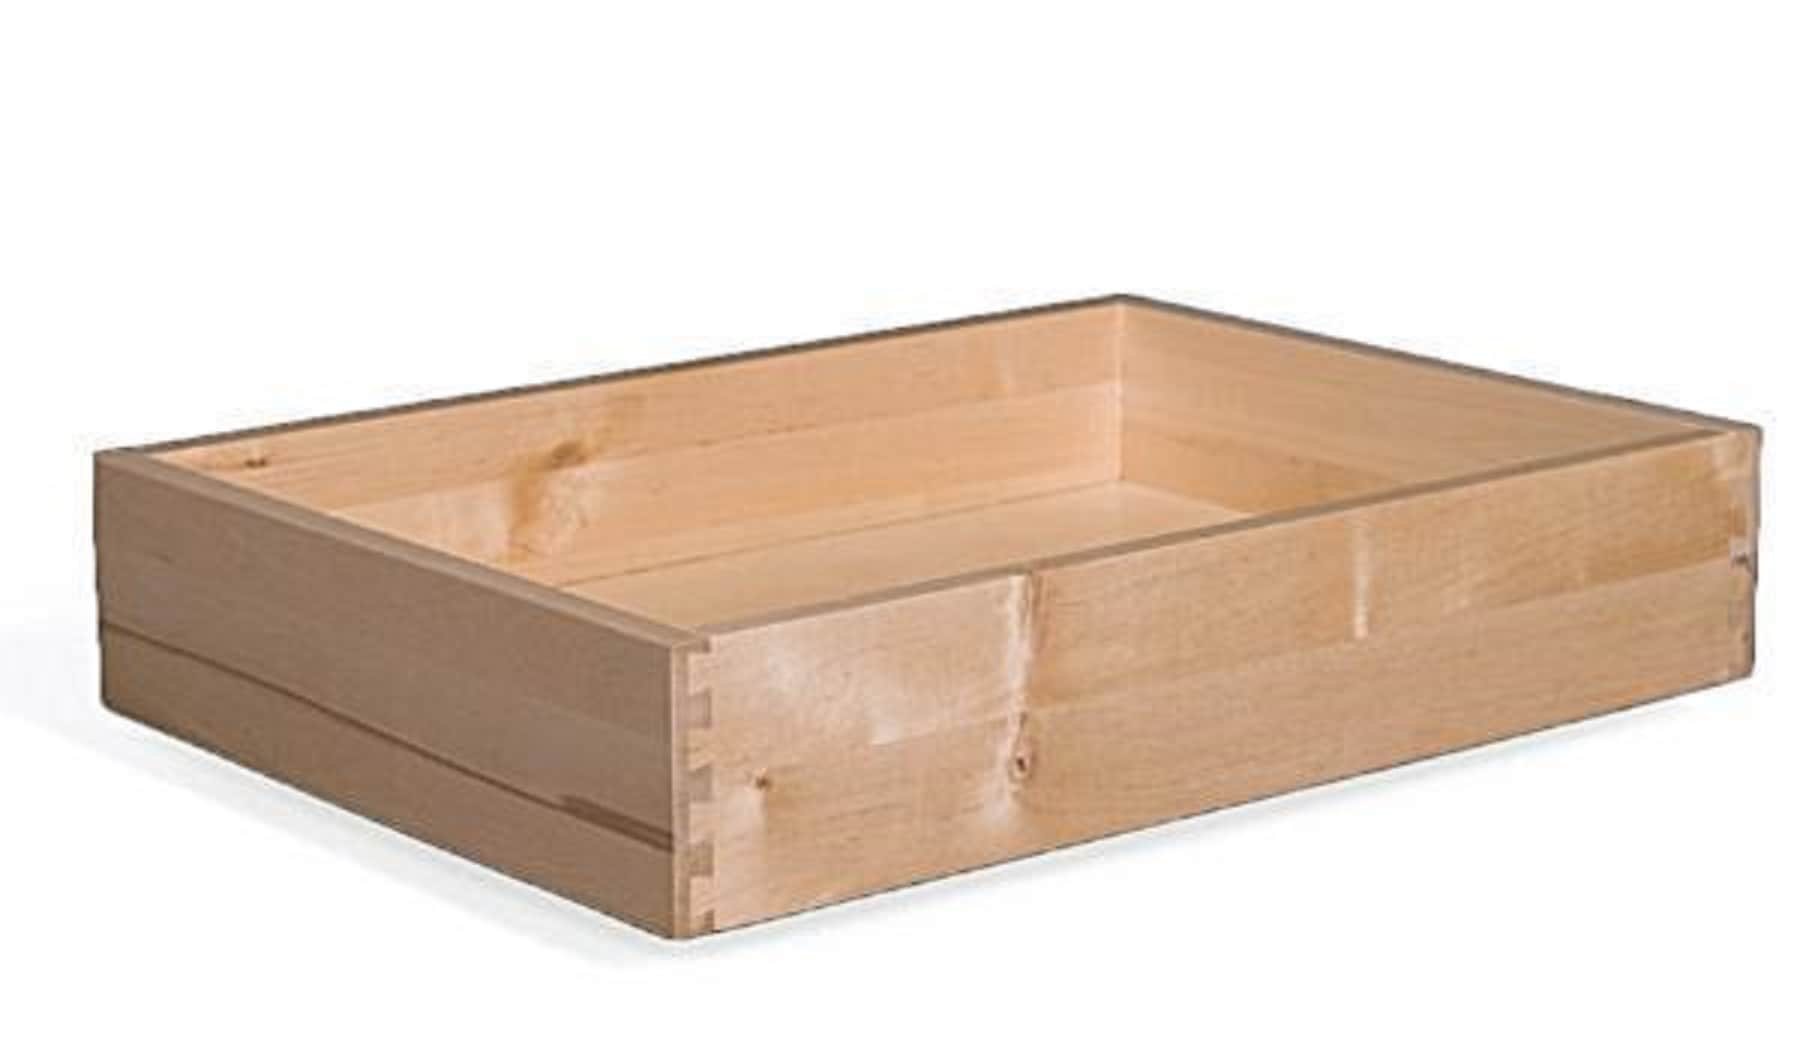 Multi-layer Diamond Painting Drawer Organizer Box Tool Wood